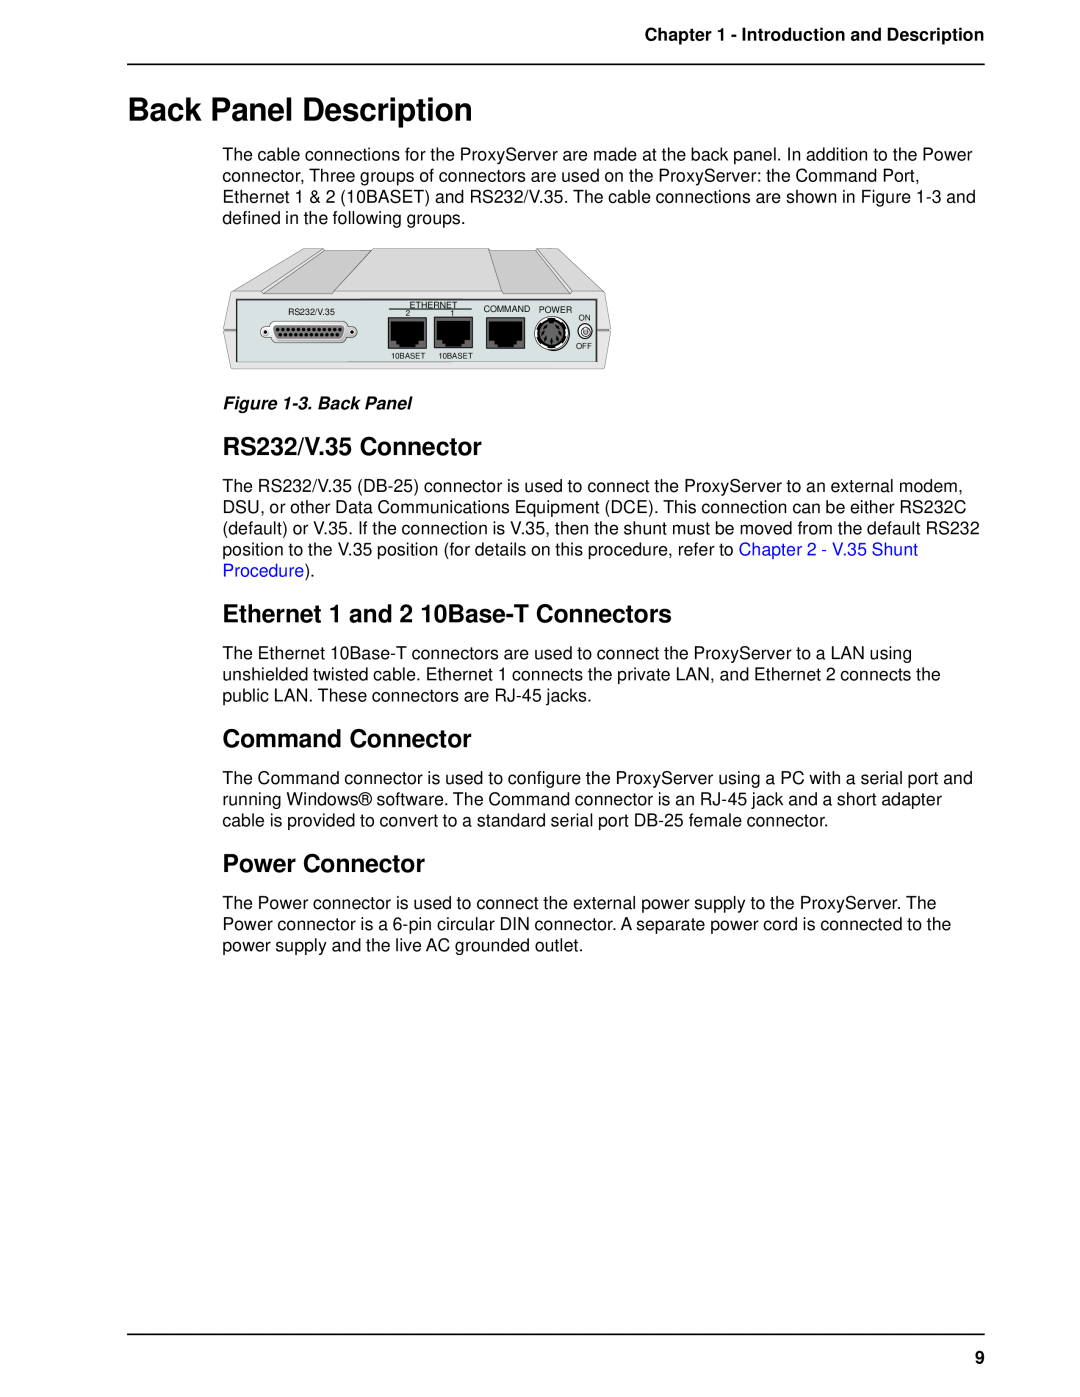 Multitech MTPSR1-120 Back Panel Description, RS232/V.35 Connector, Ethernet 1 and 2 10Base-T Connectors, Command Connector 